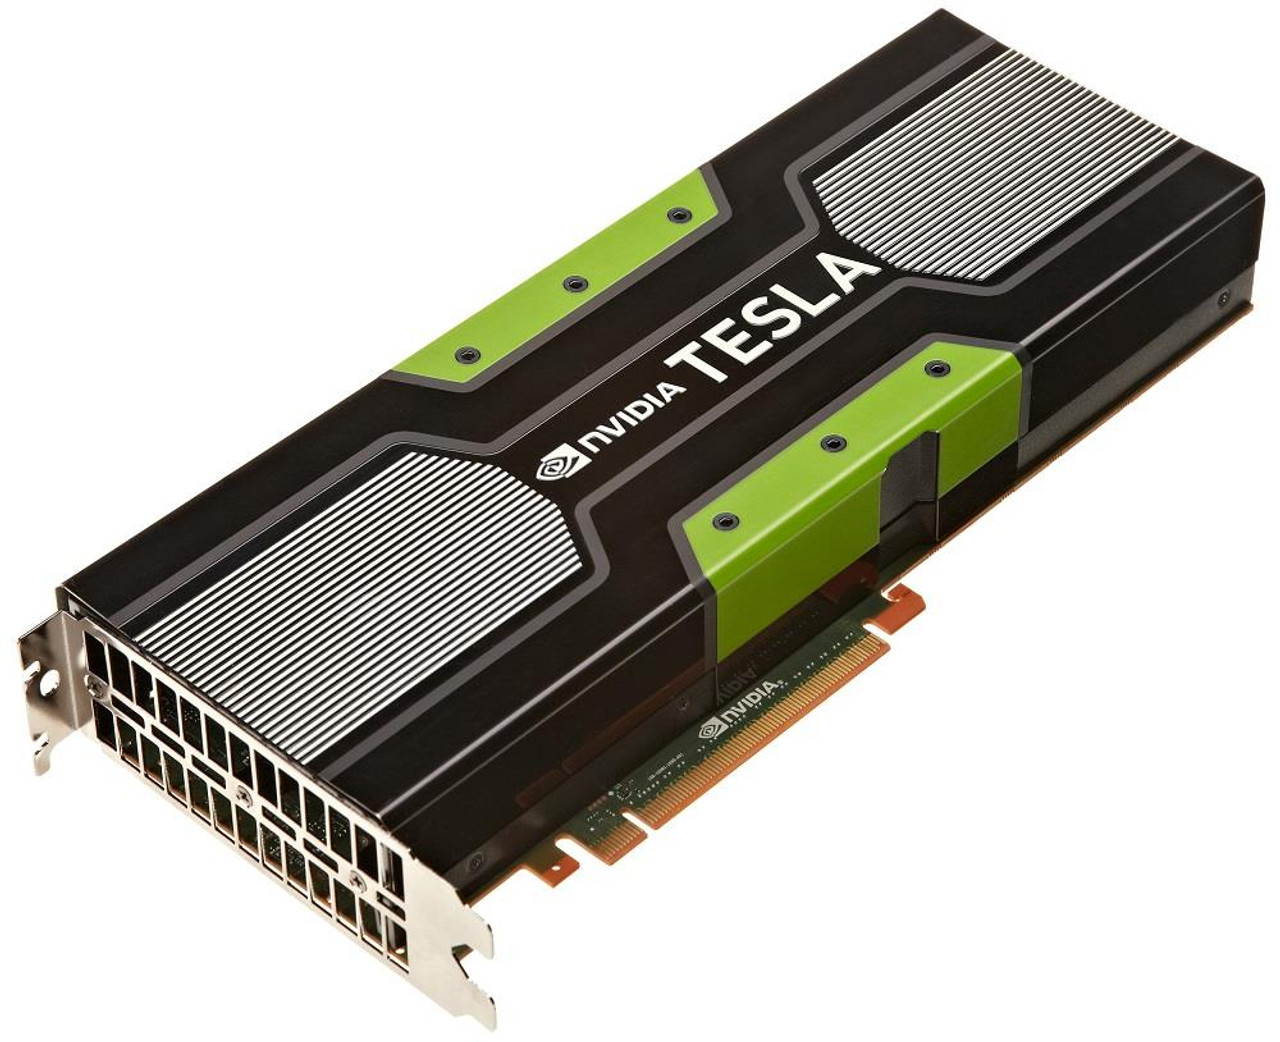 C7S15A - HP Nvidia Tesla K20X GPU Computing Processor 6GB GDDR5 PCI-Express x16 Computational Accelerator